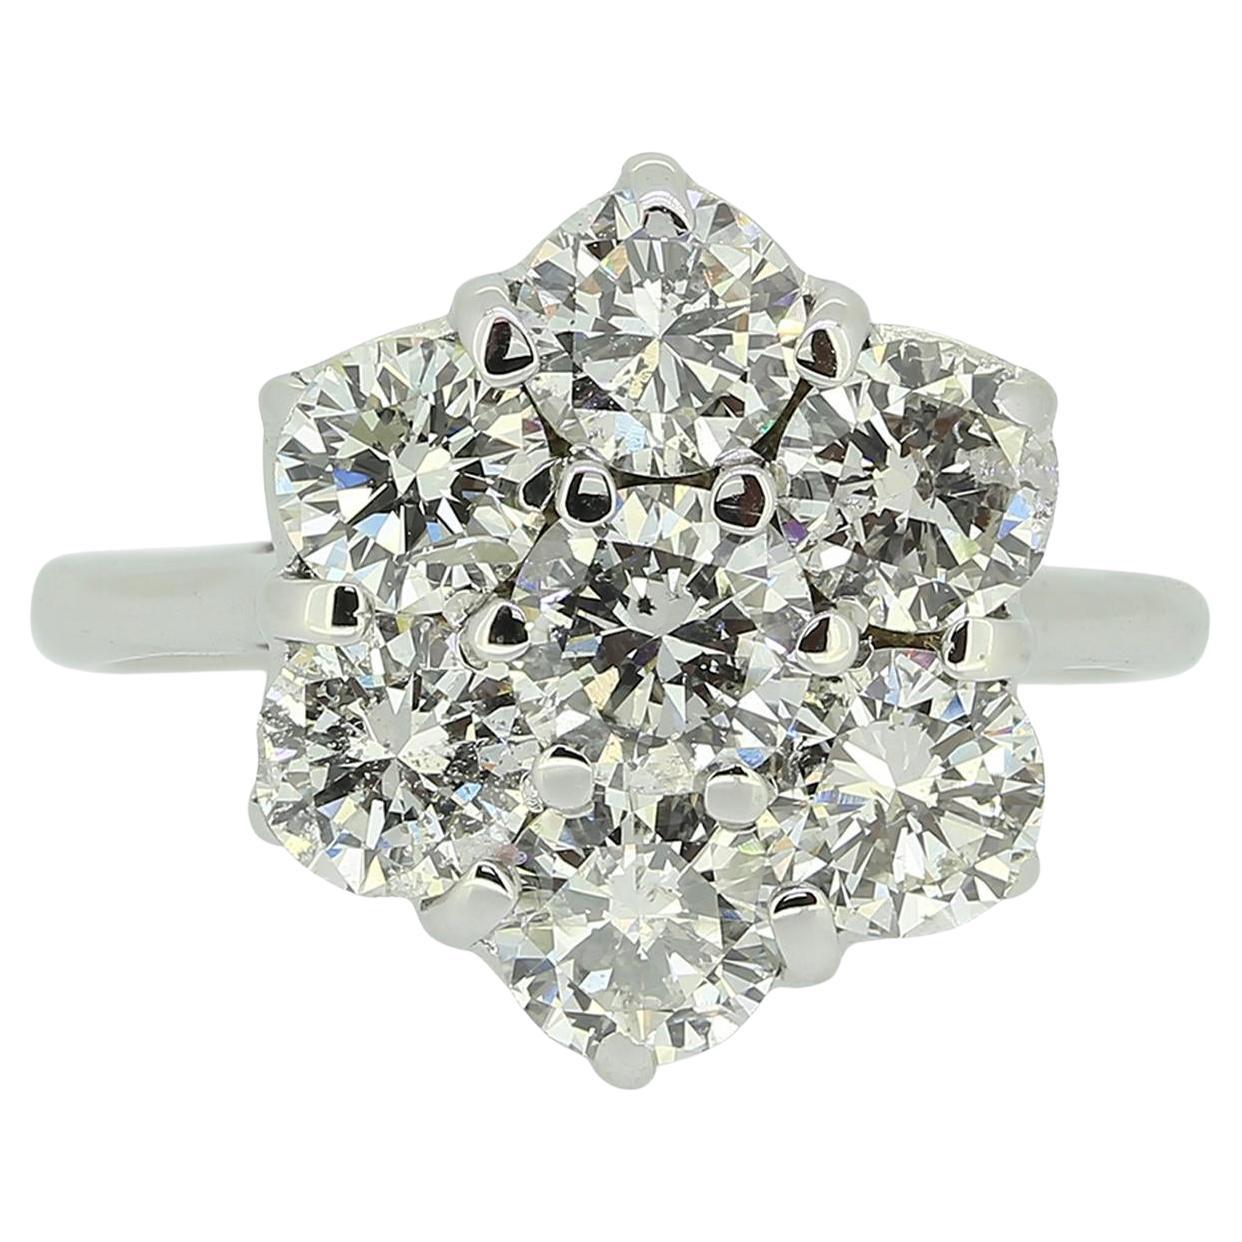 2.52 Carat Diamond Daisy Cluster Ring